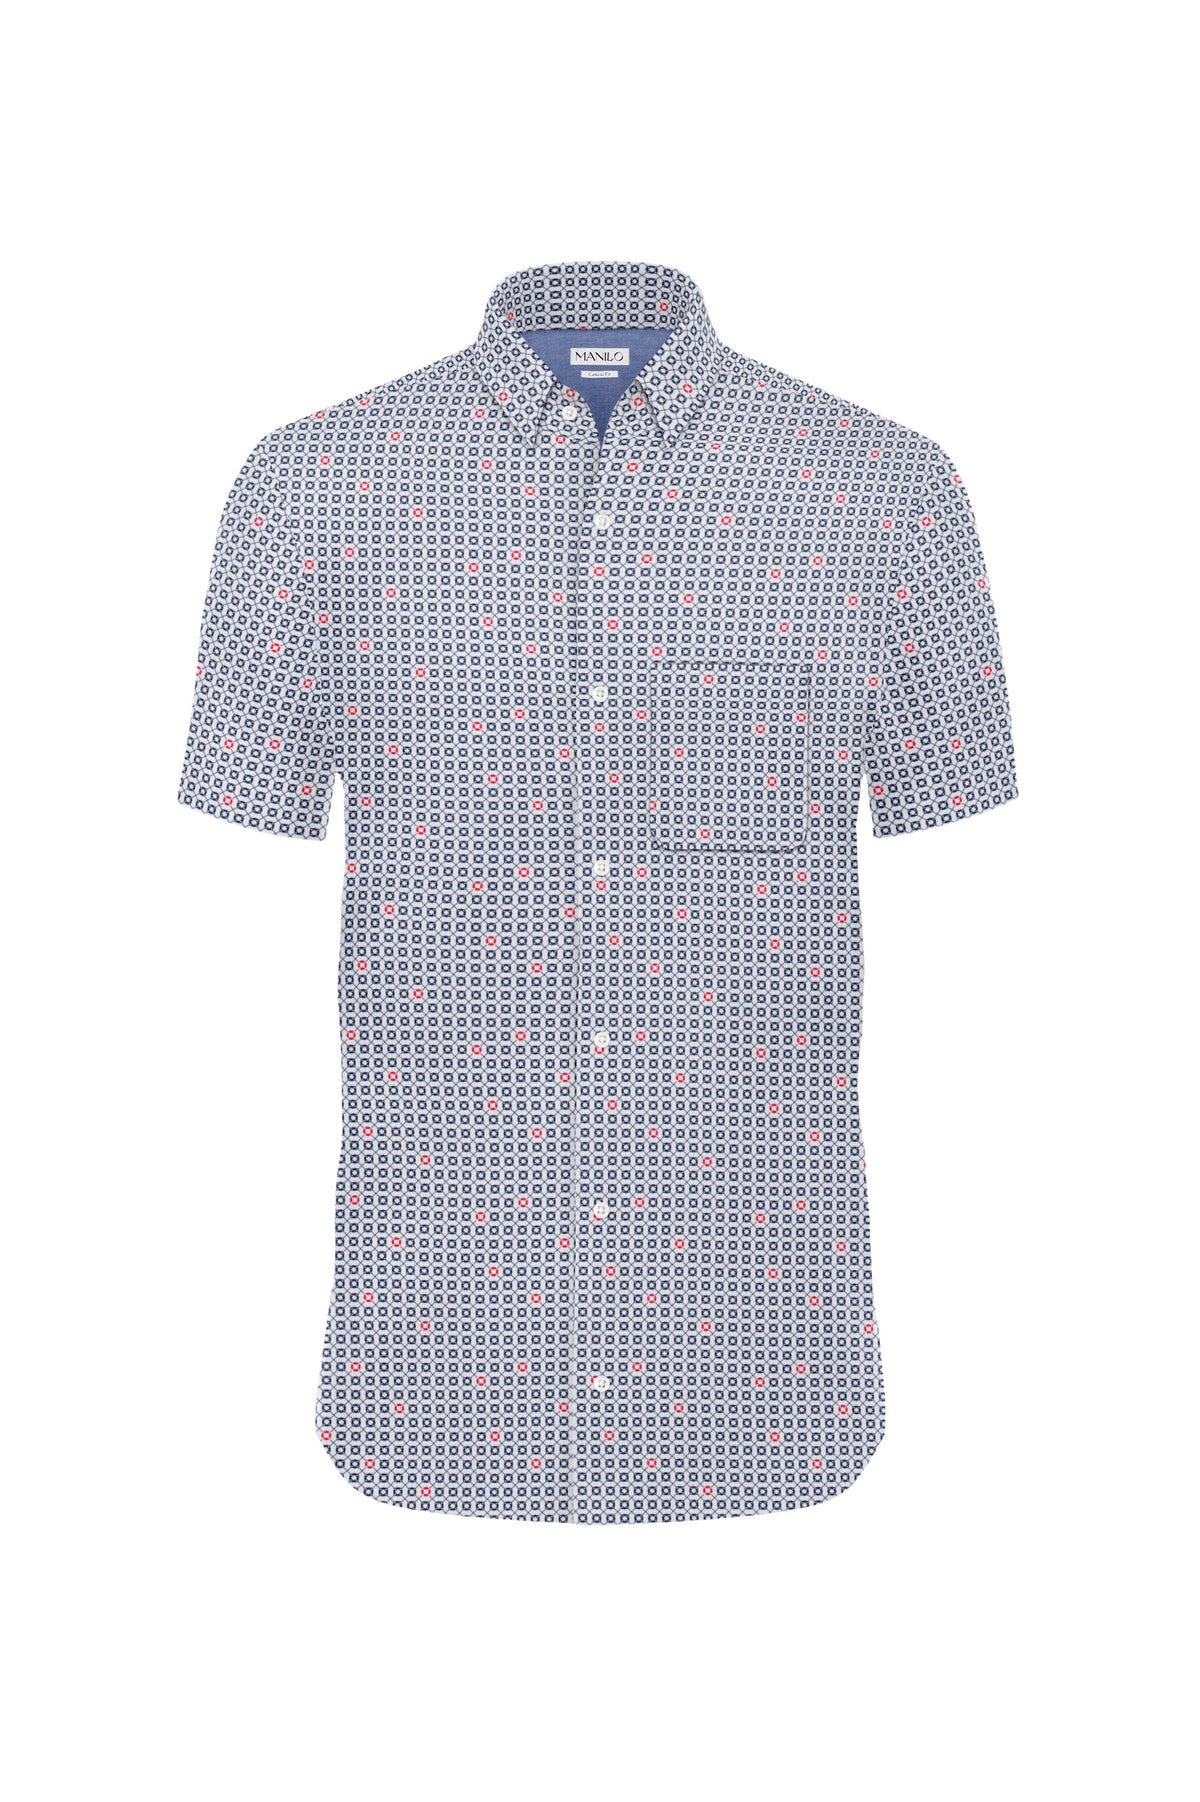 Casual shirt with summery print pattern (Art. 2222-C-KA)